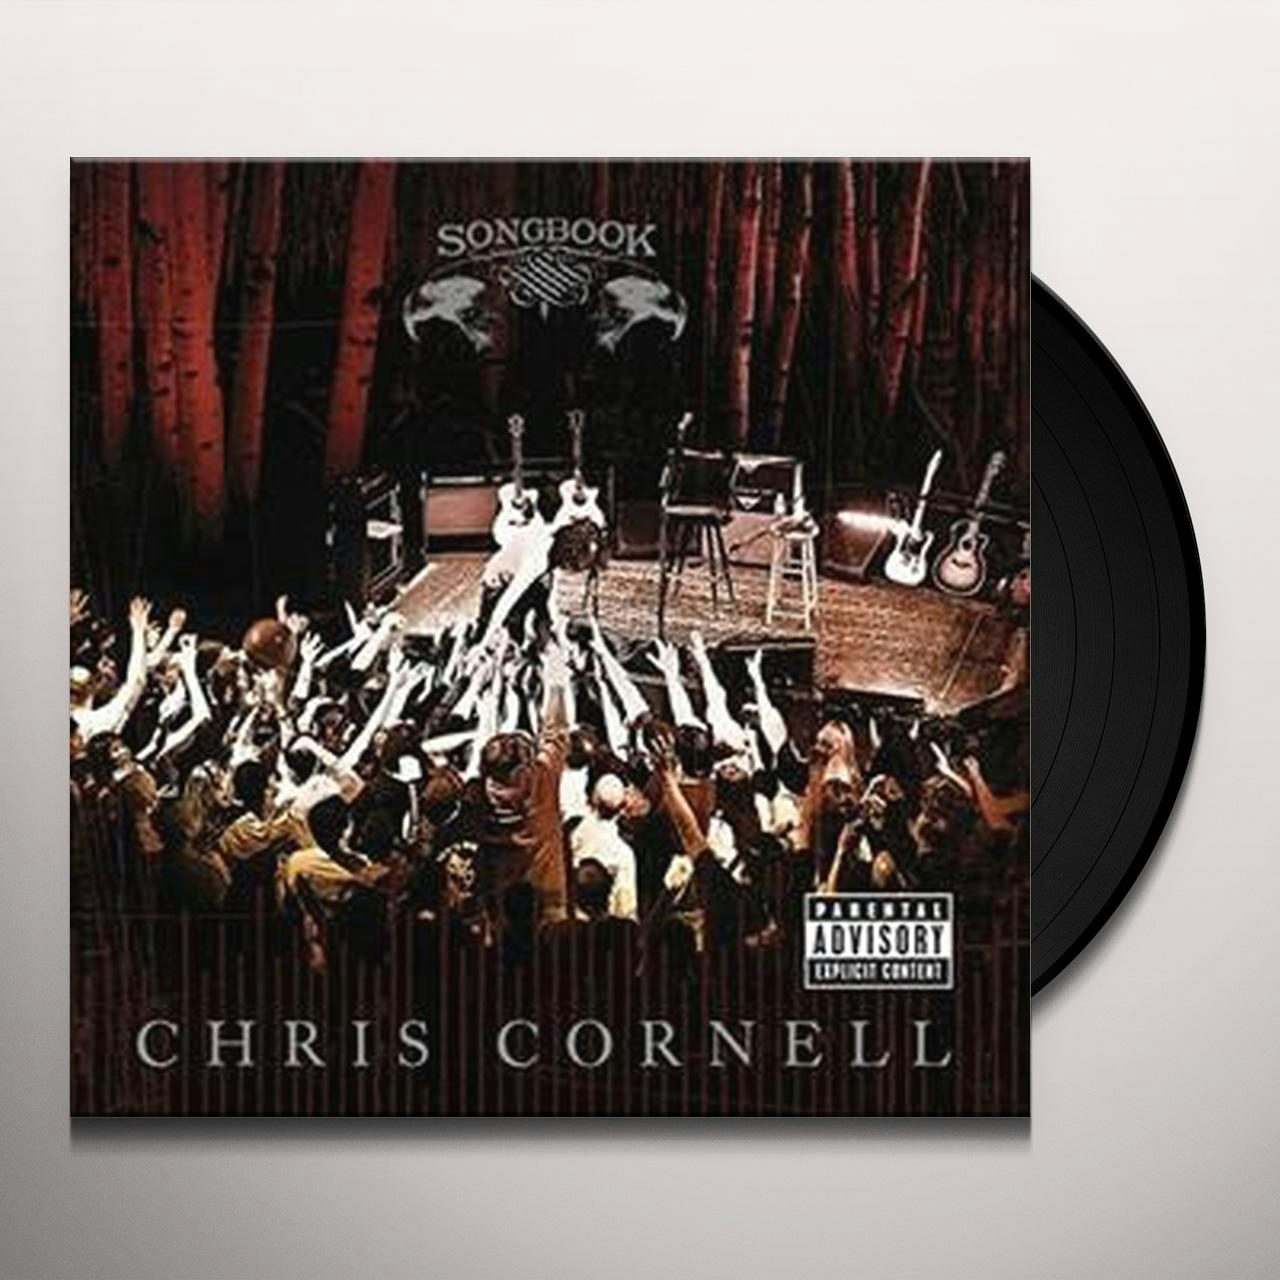 chris cornell songbook vinyl reissue